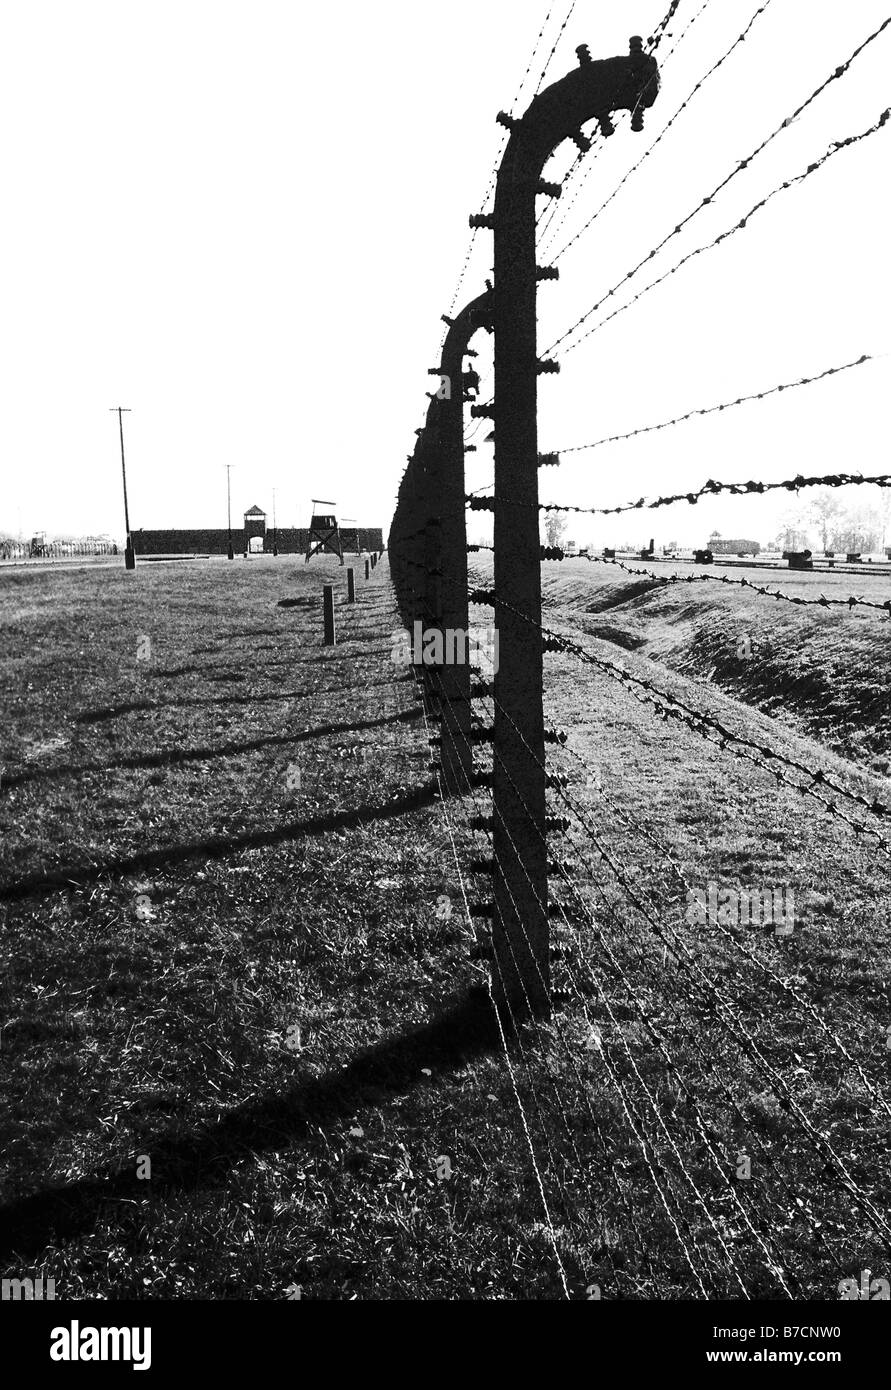 The concentration camp Auschwitz II - Birkenau, Poland, Auschwitz Stock Photo